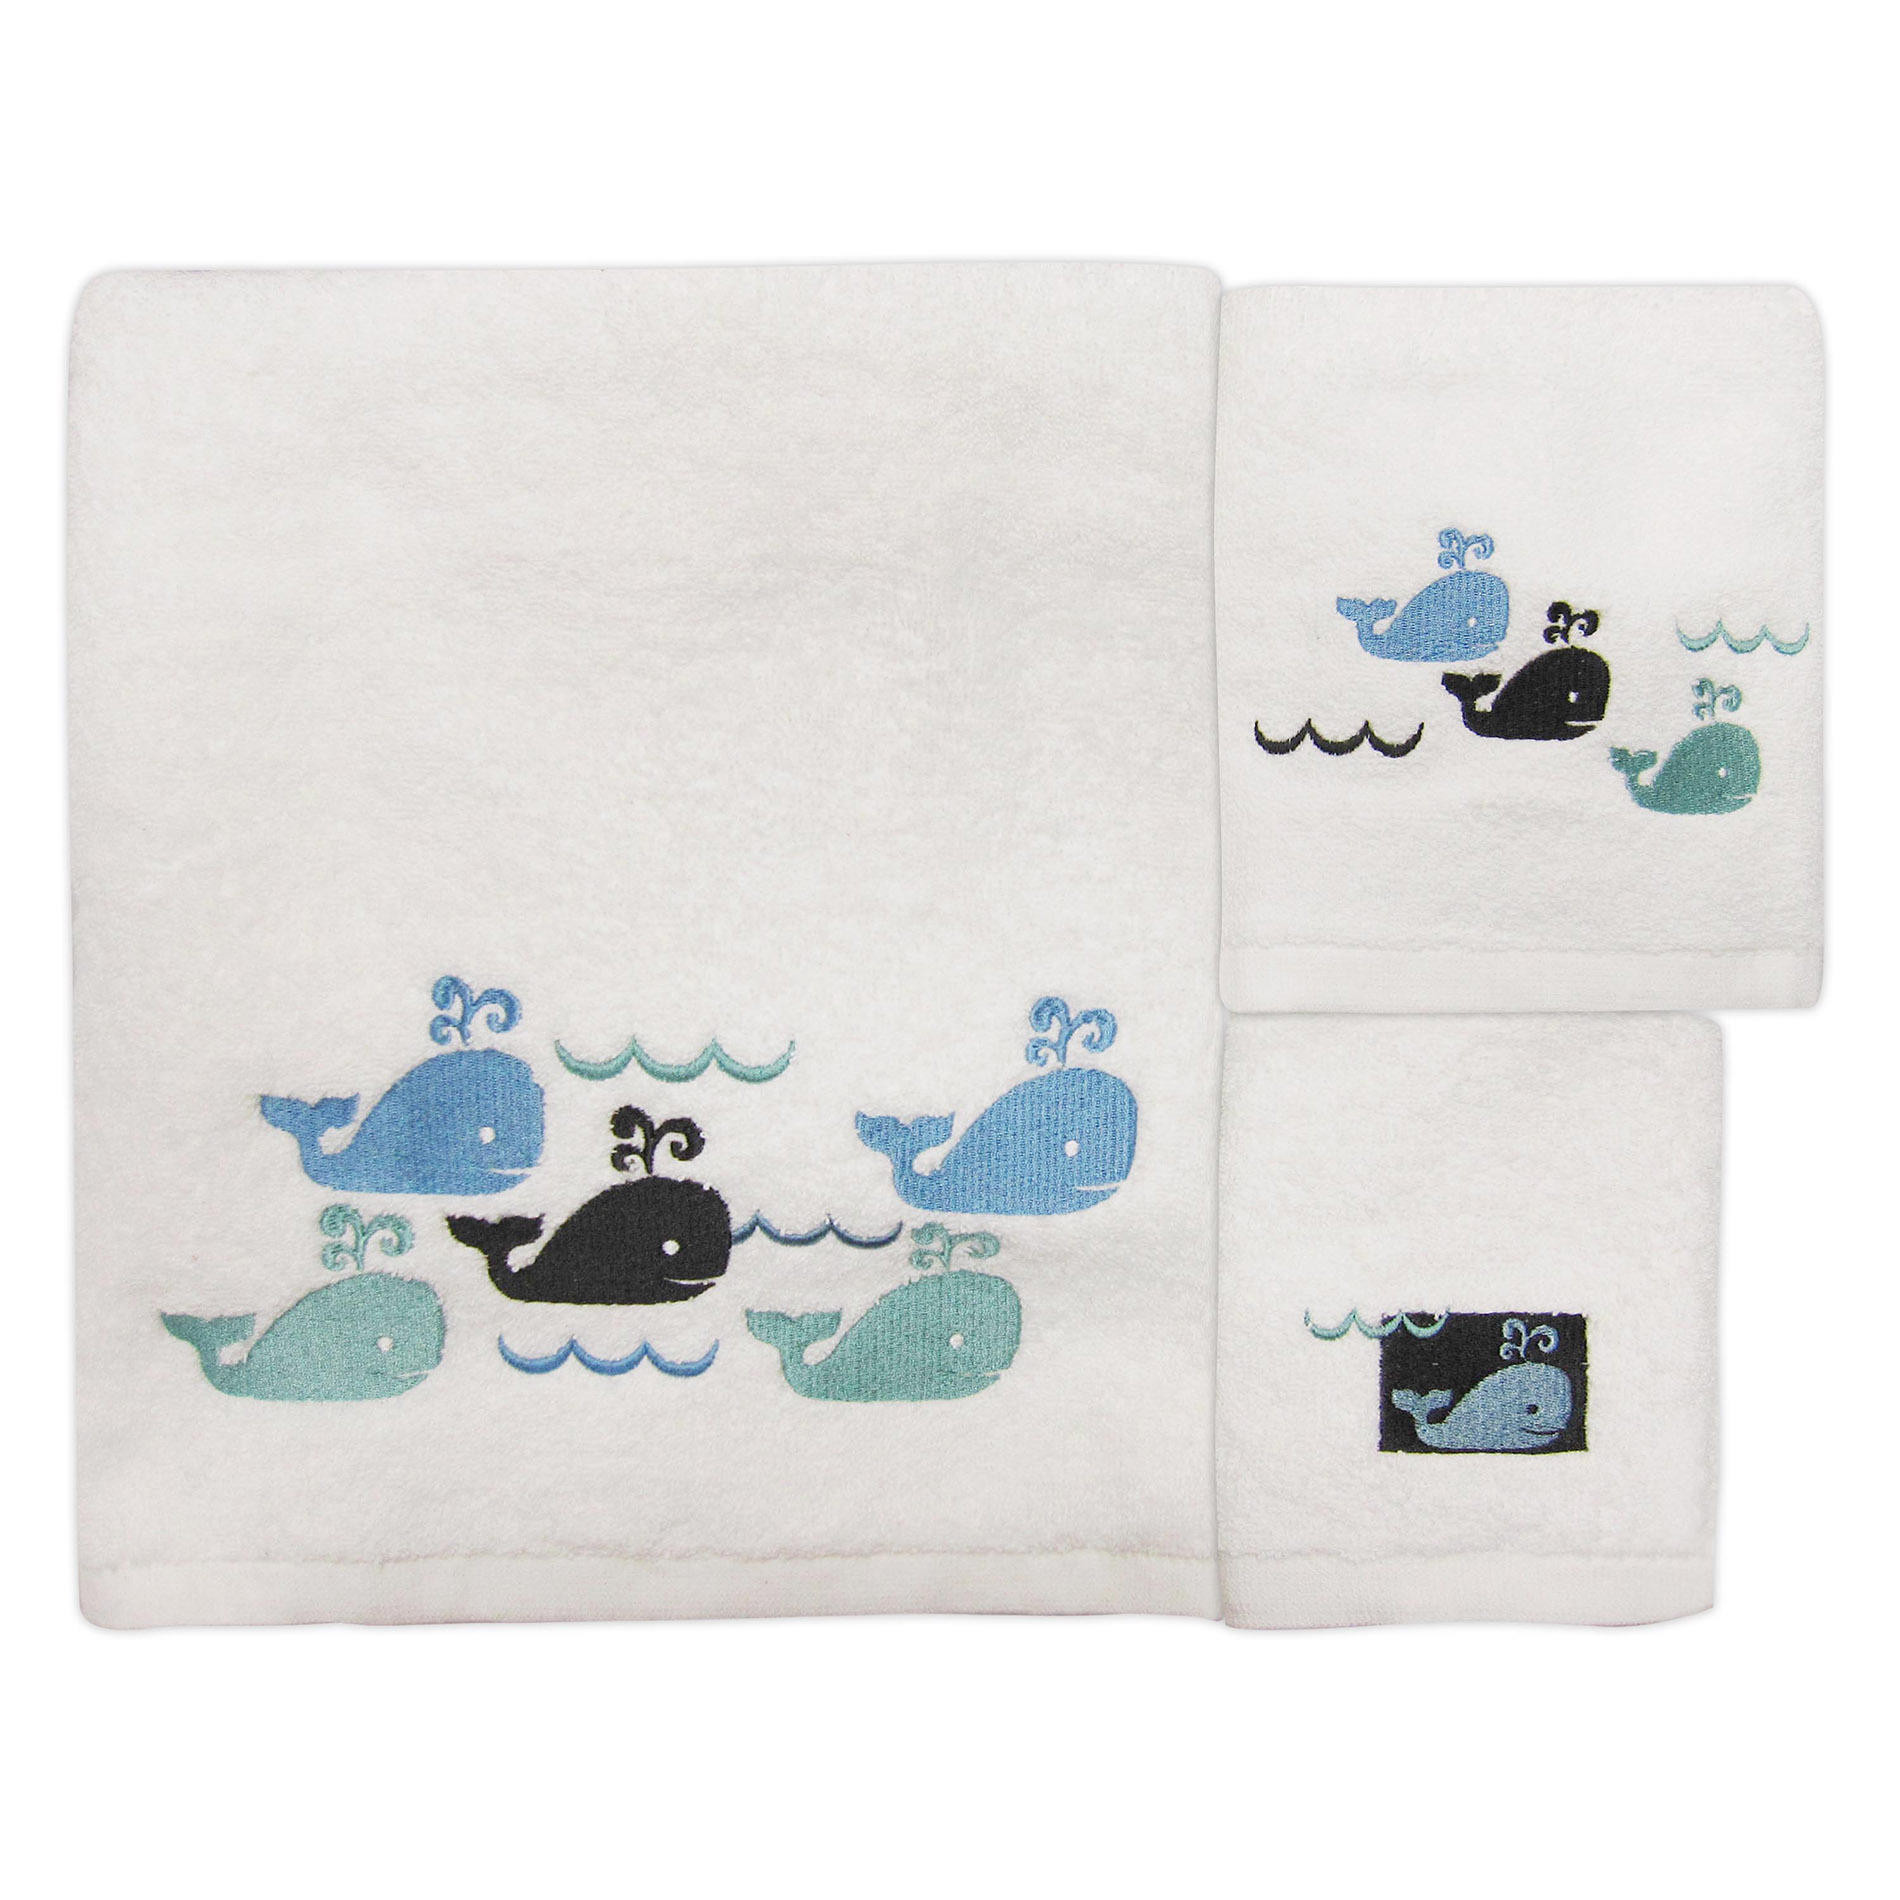 Whale Bathroom Decor
 Whale Watch Bath Towel Set Whales & Waves